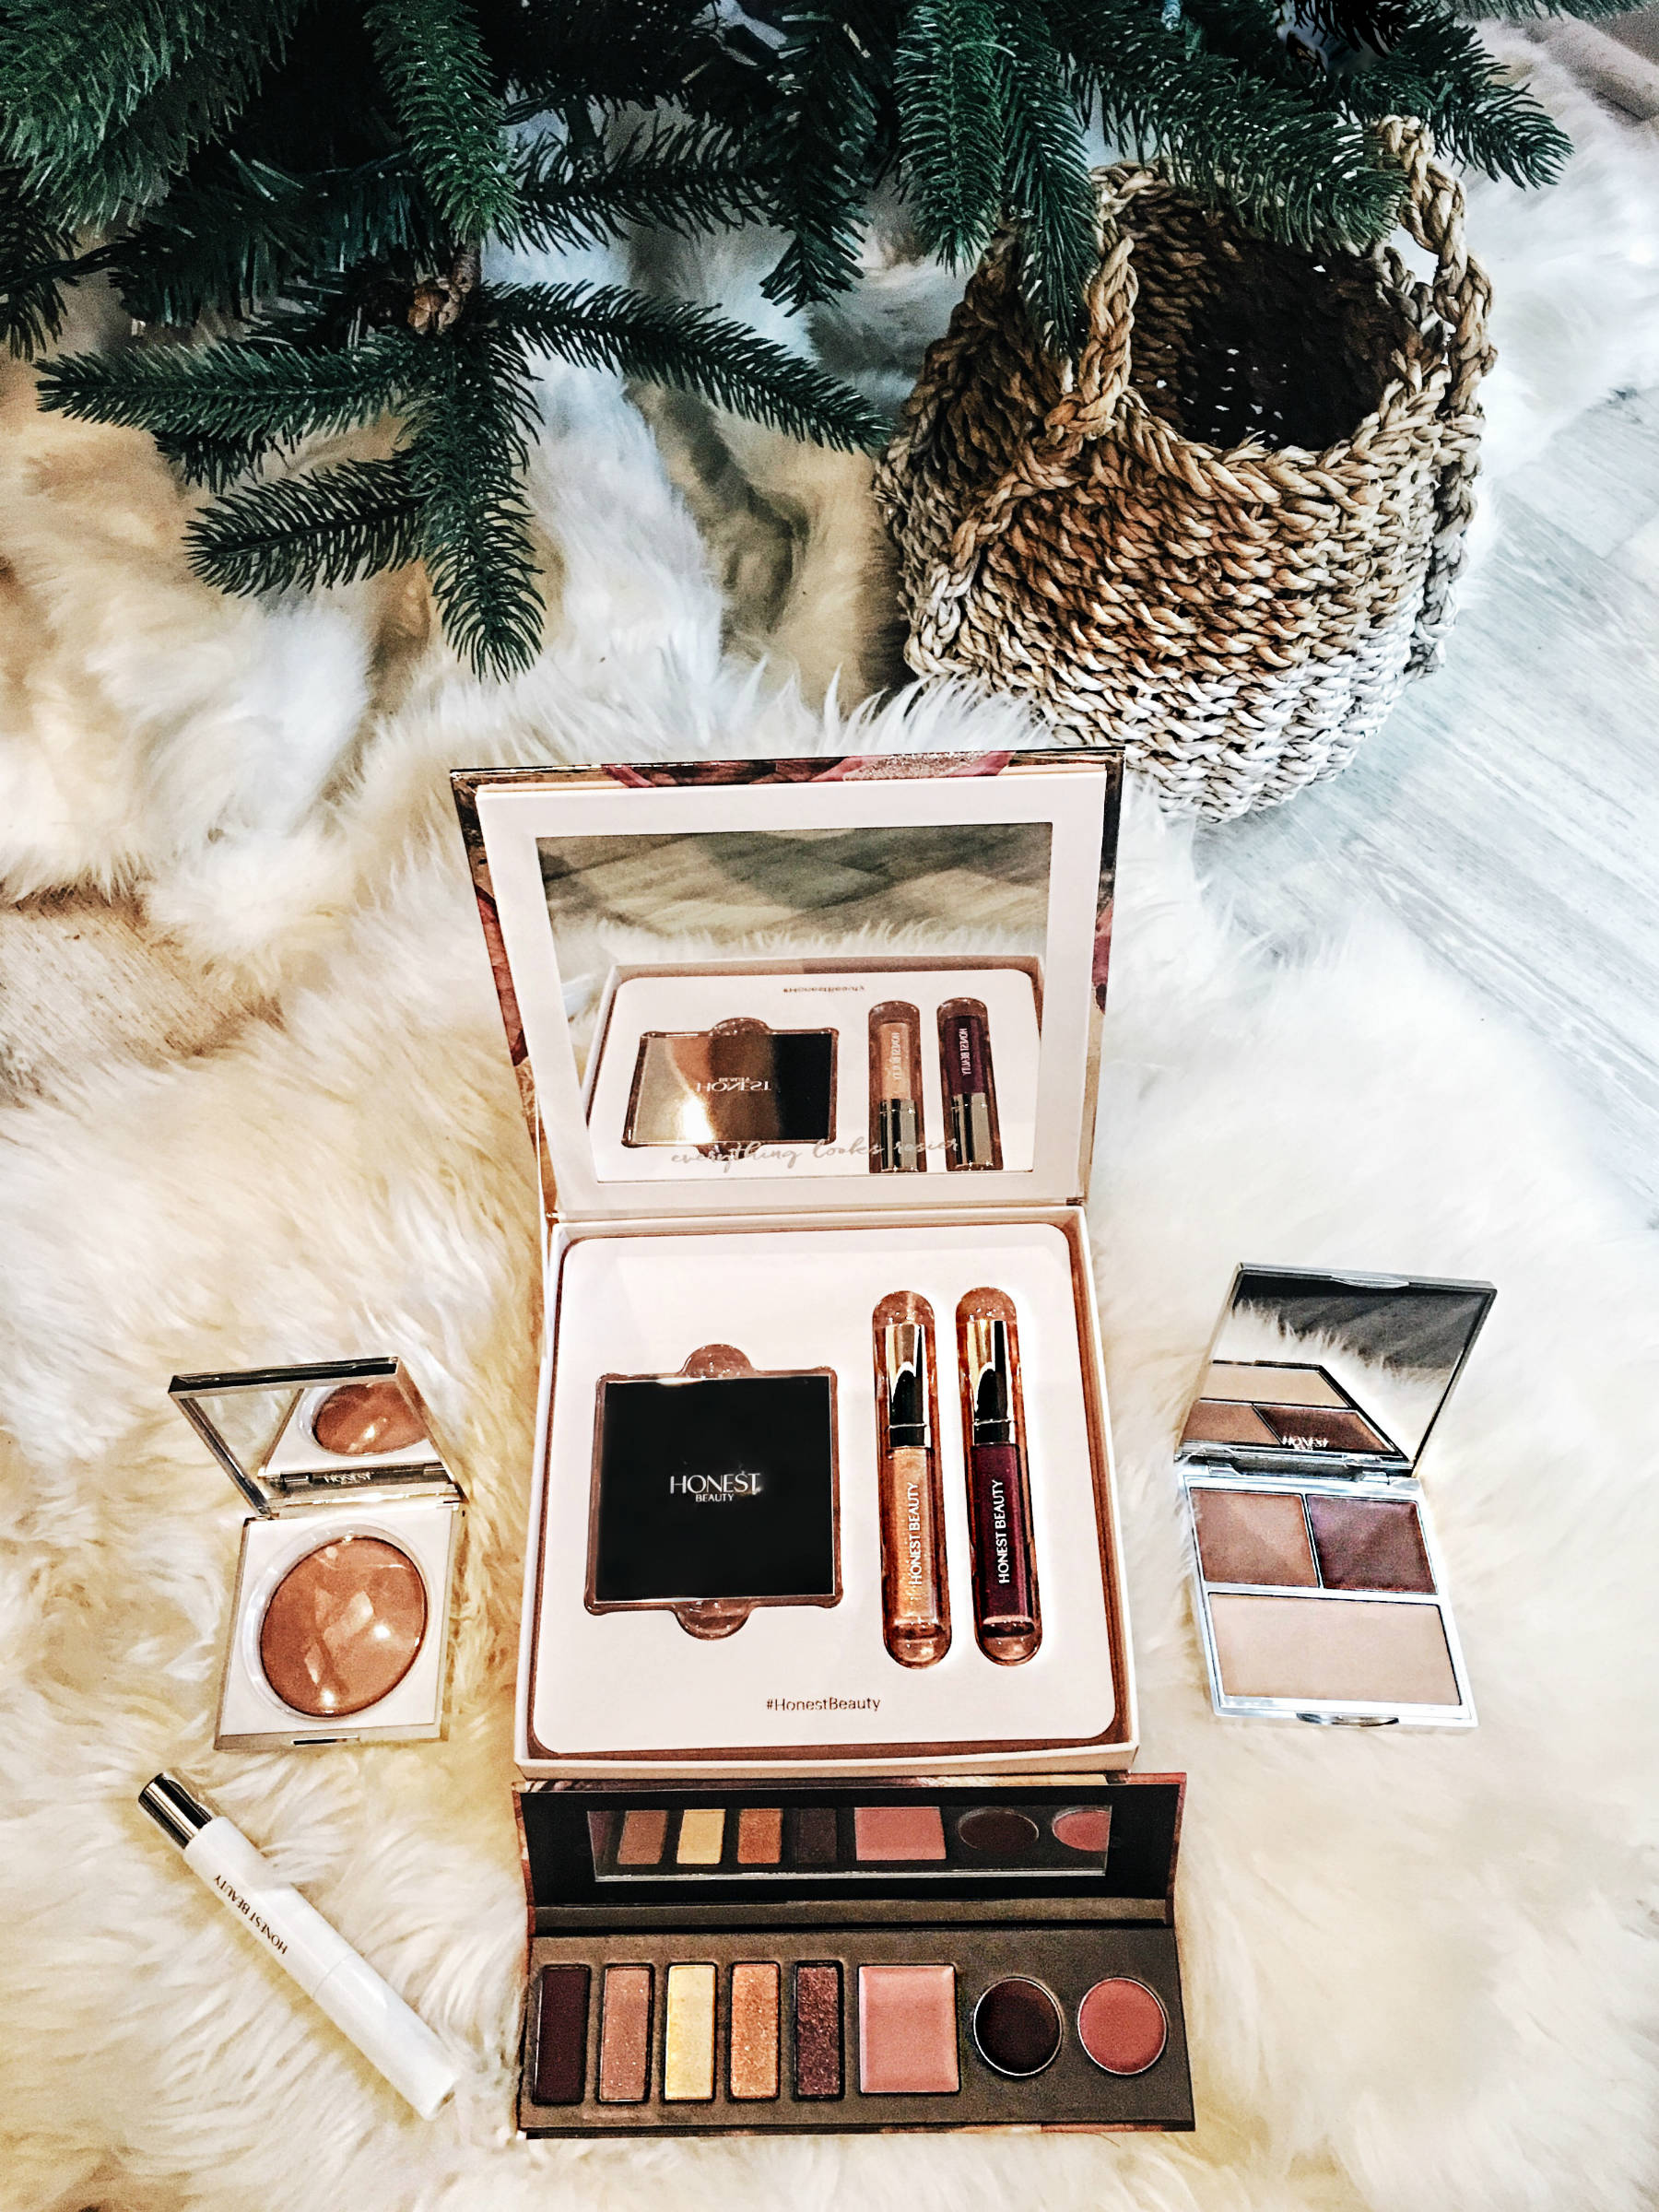 Holiday Giveaway item Honest Beauty make-up set under christmas tree.